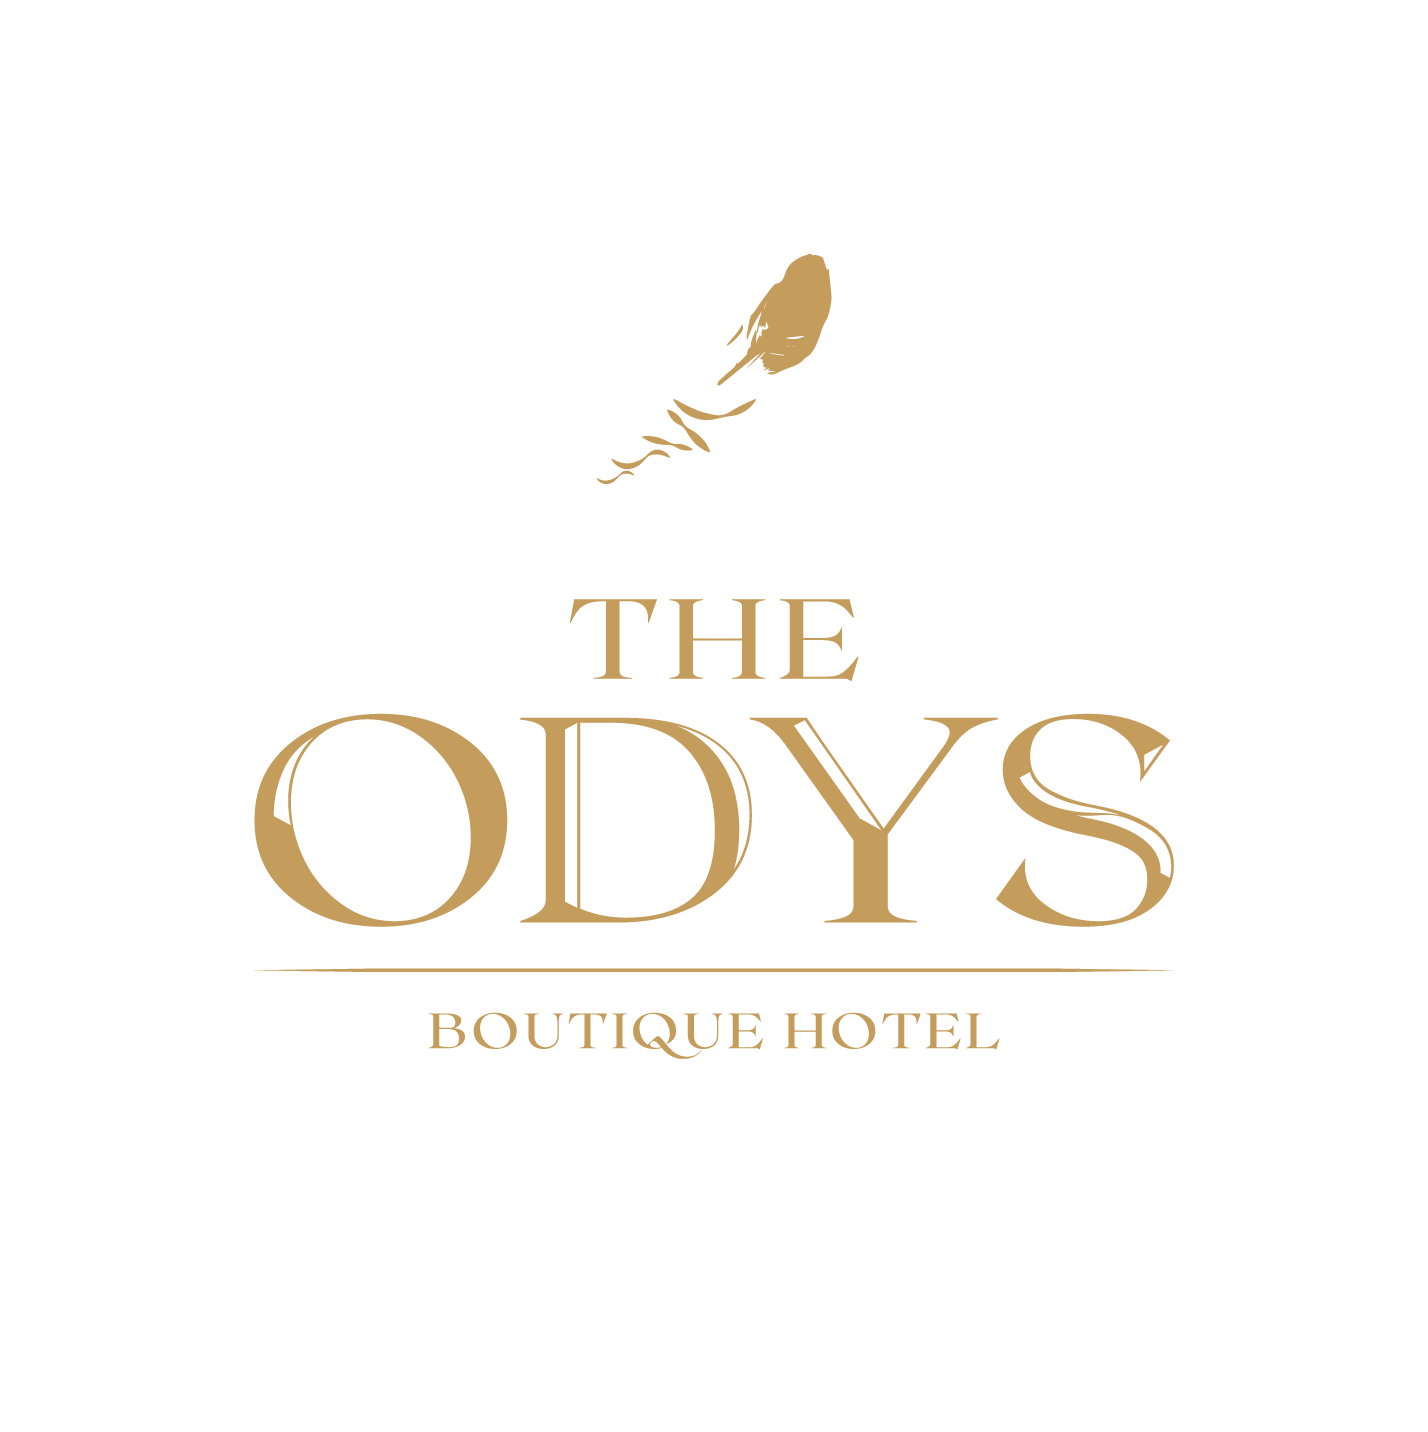 The Odys Hotel